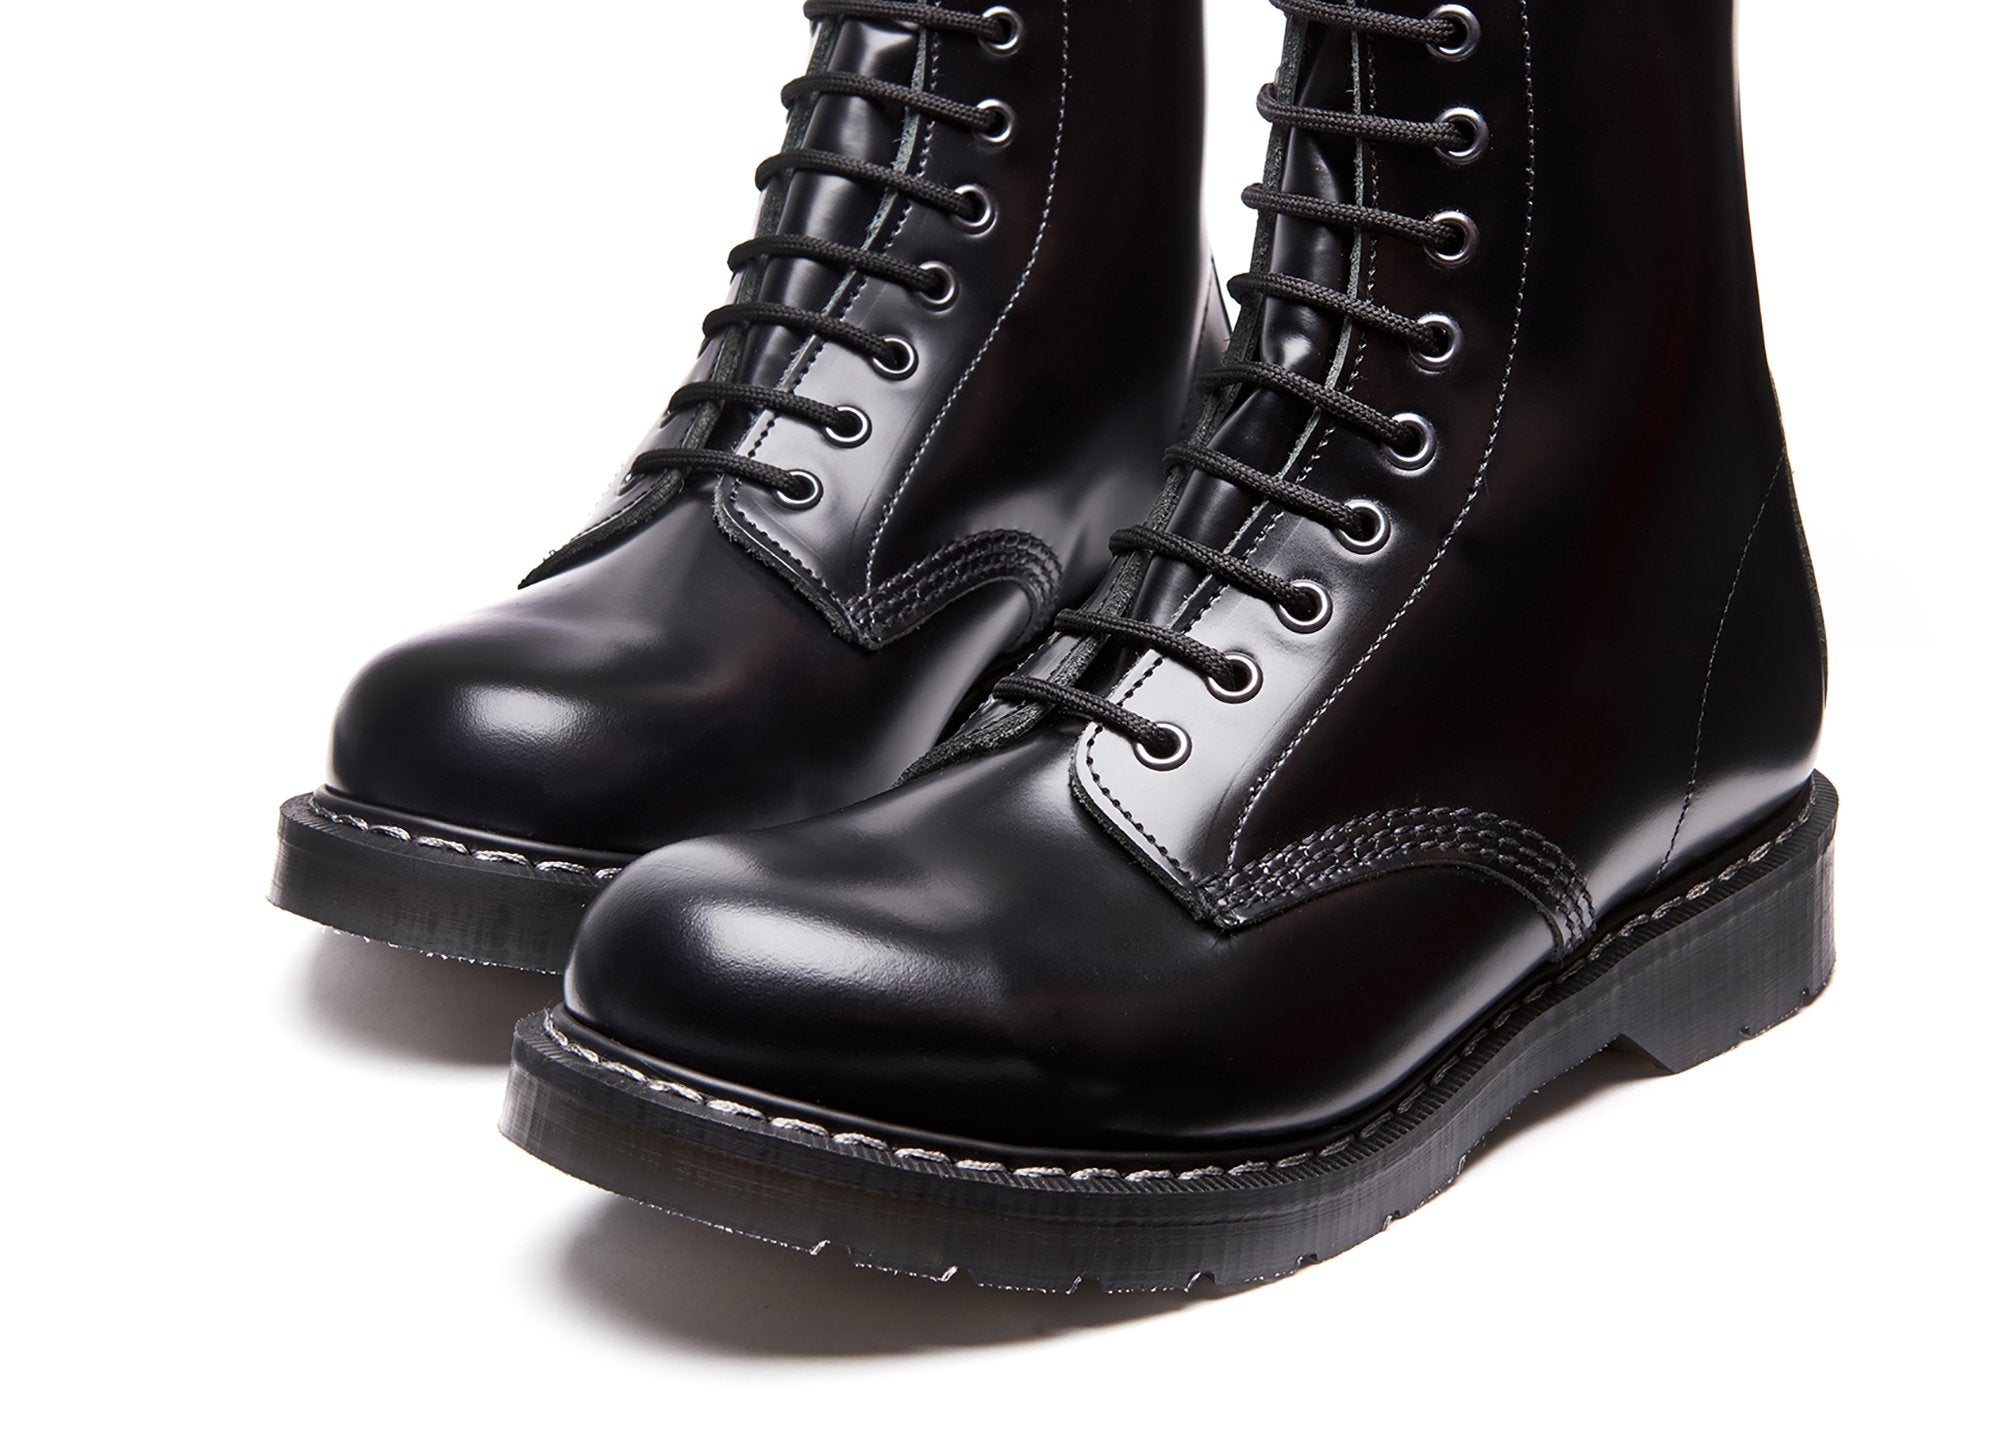 Black Patent 8 Eye Derby Boot | Solovair | Handmade in England 4.5 Mens / 5.5 Womens